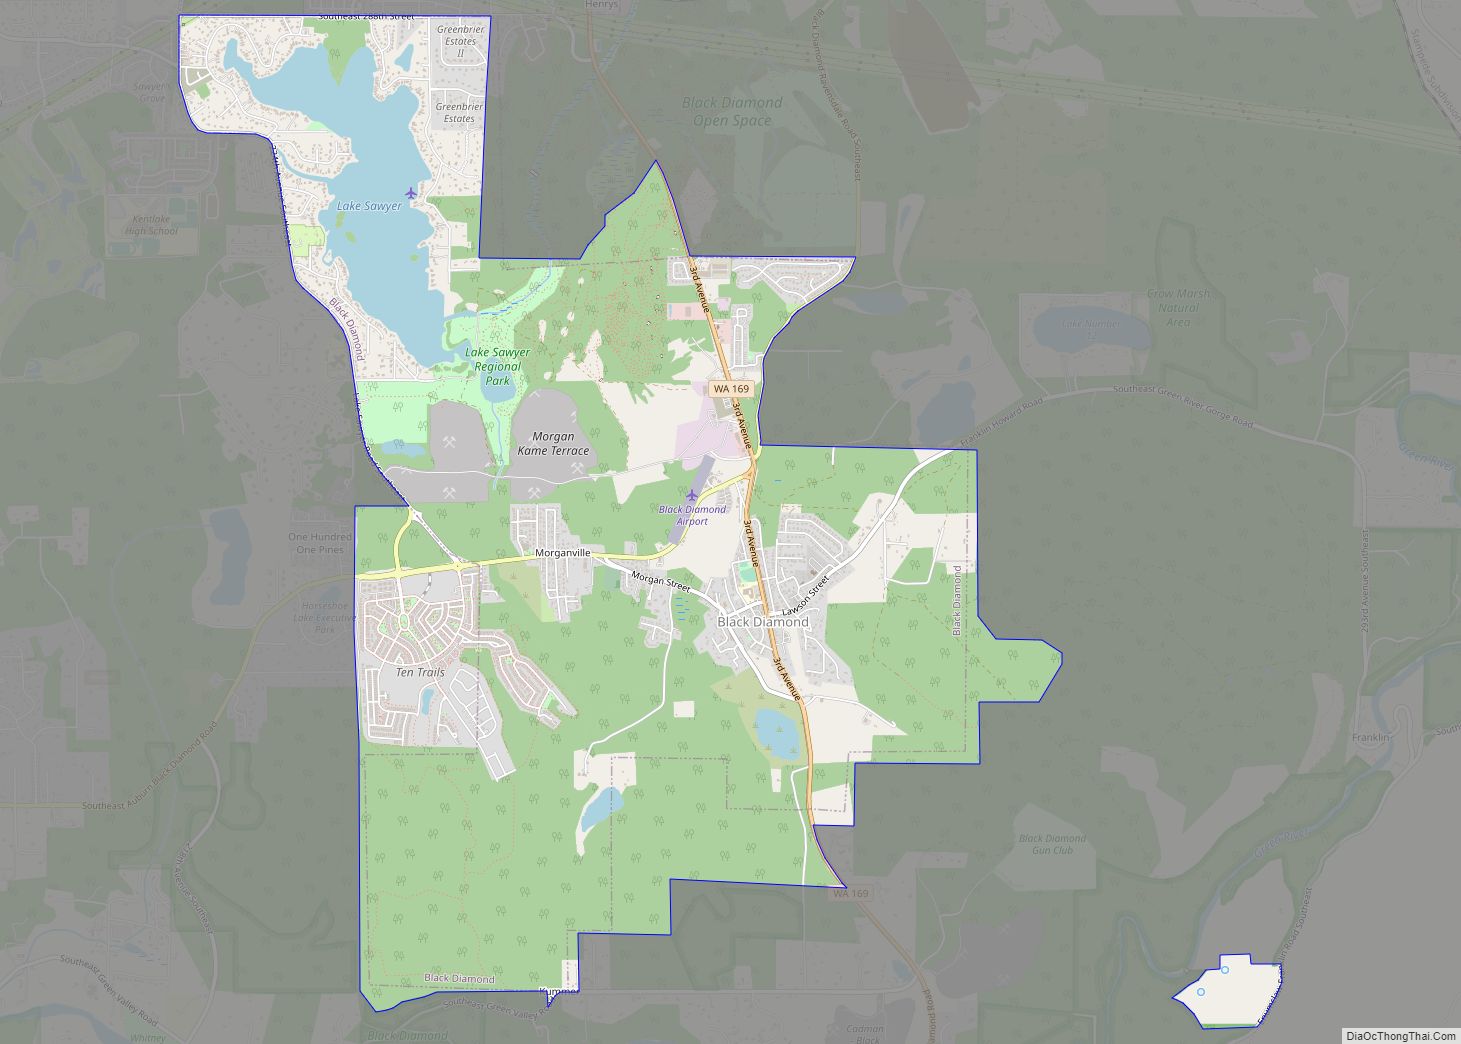 Map of Black Diamond city, Washington